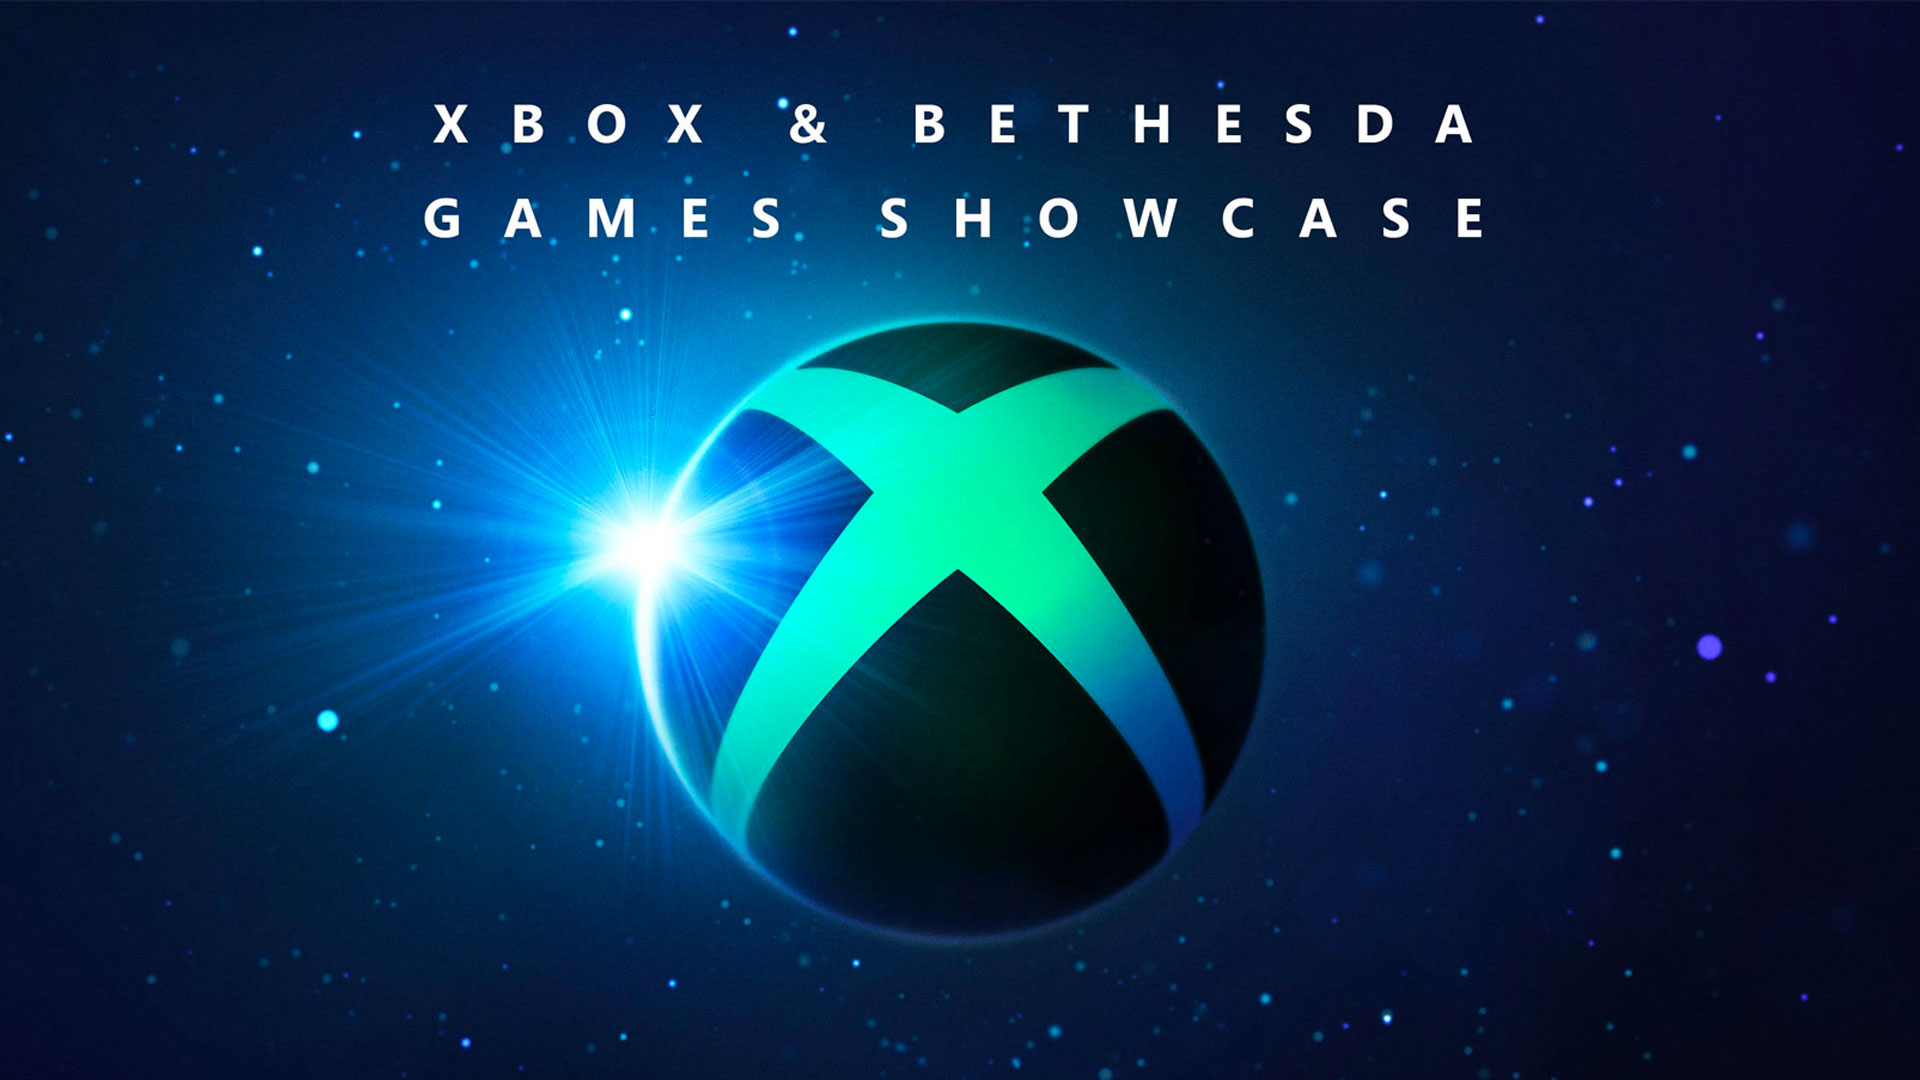 Xbox Bethesda Showcase Watch Along! [FULL STREAM]